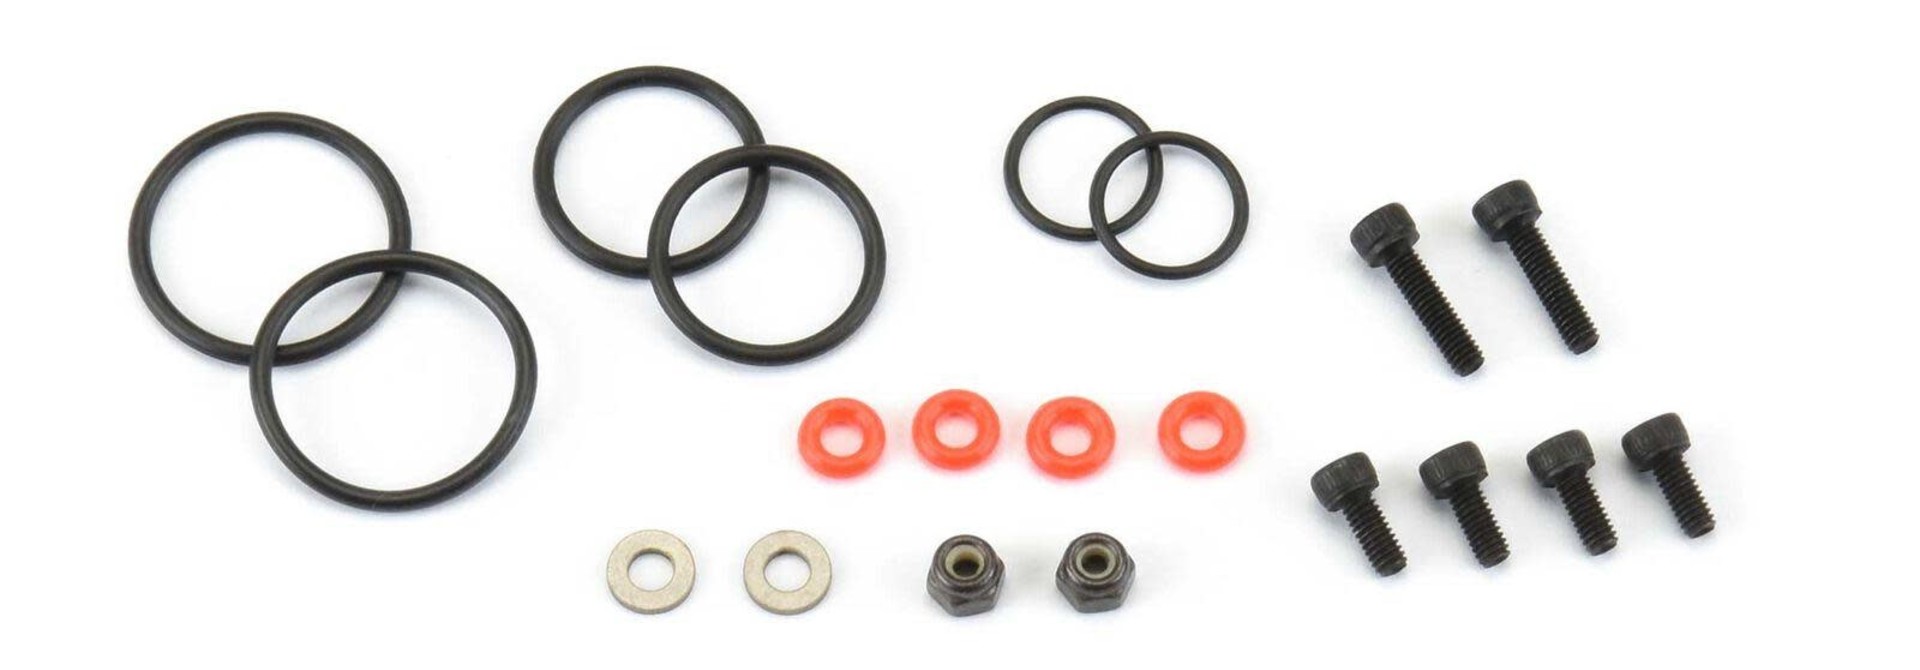 Proline O-Ring Replacement Kit: PowerStroke 635900/635901